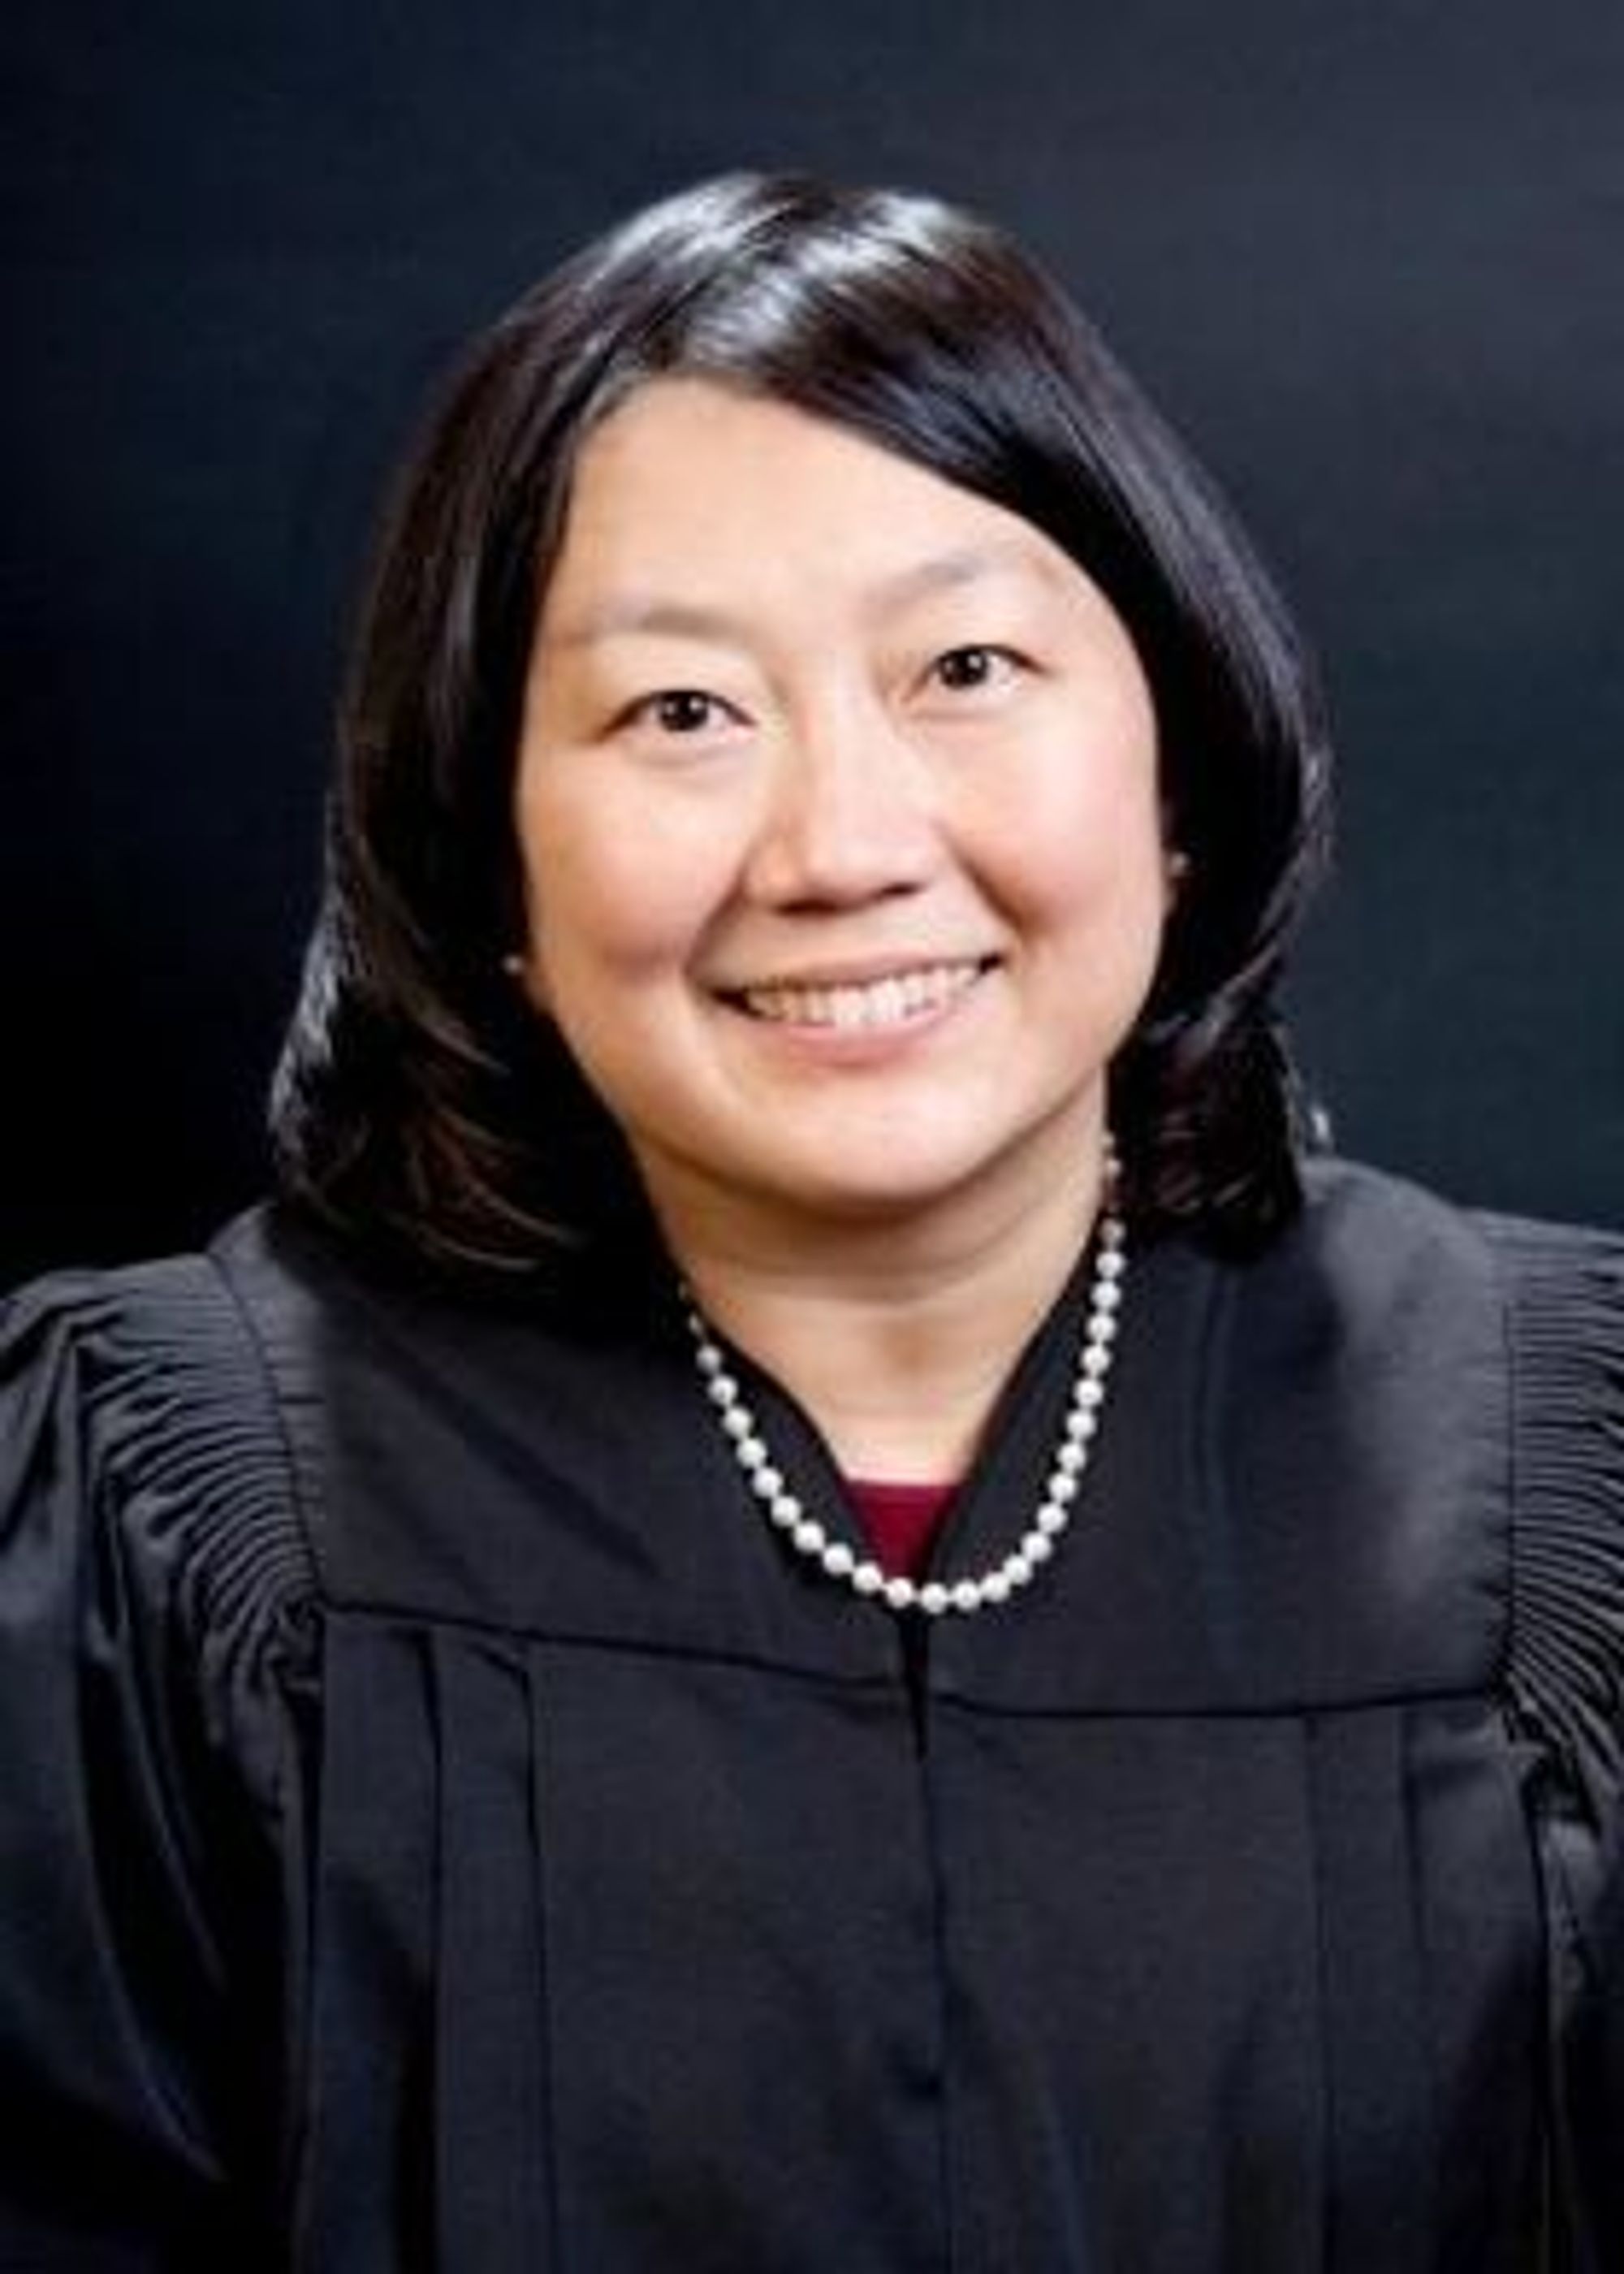 Lucy Koh er dommer ved distriktsdomstolen i Northern District of California.